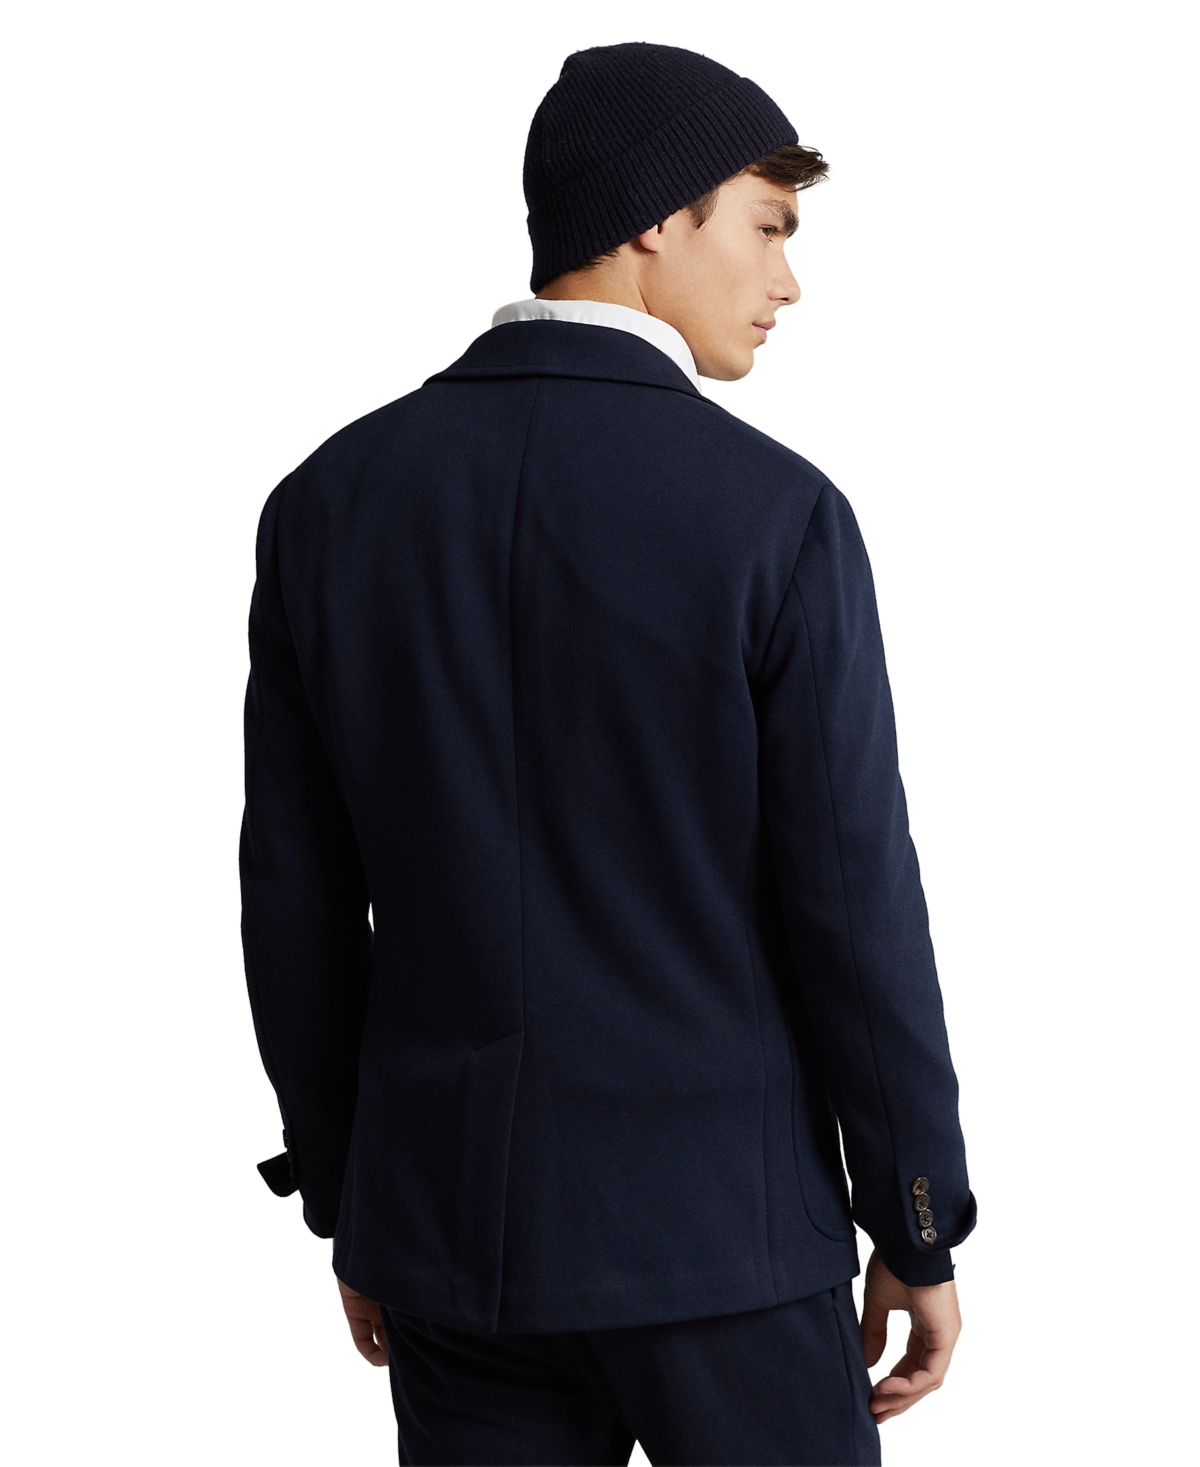 Polo Soft Double-Knit Suit Jacket